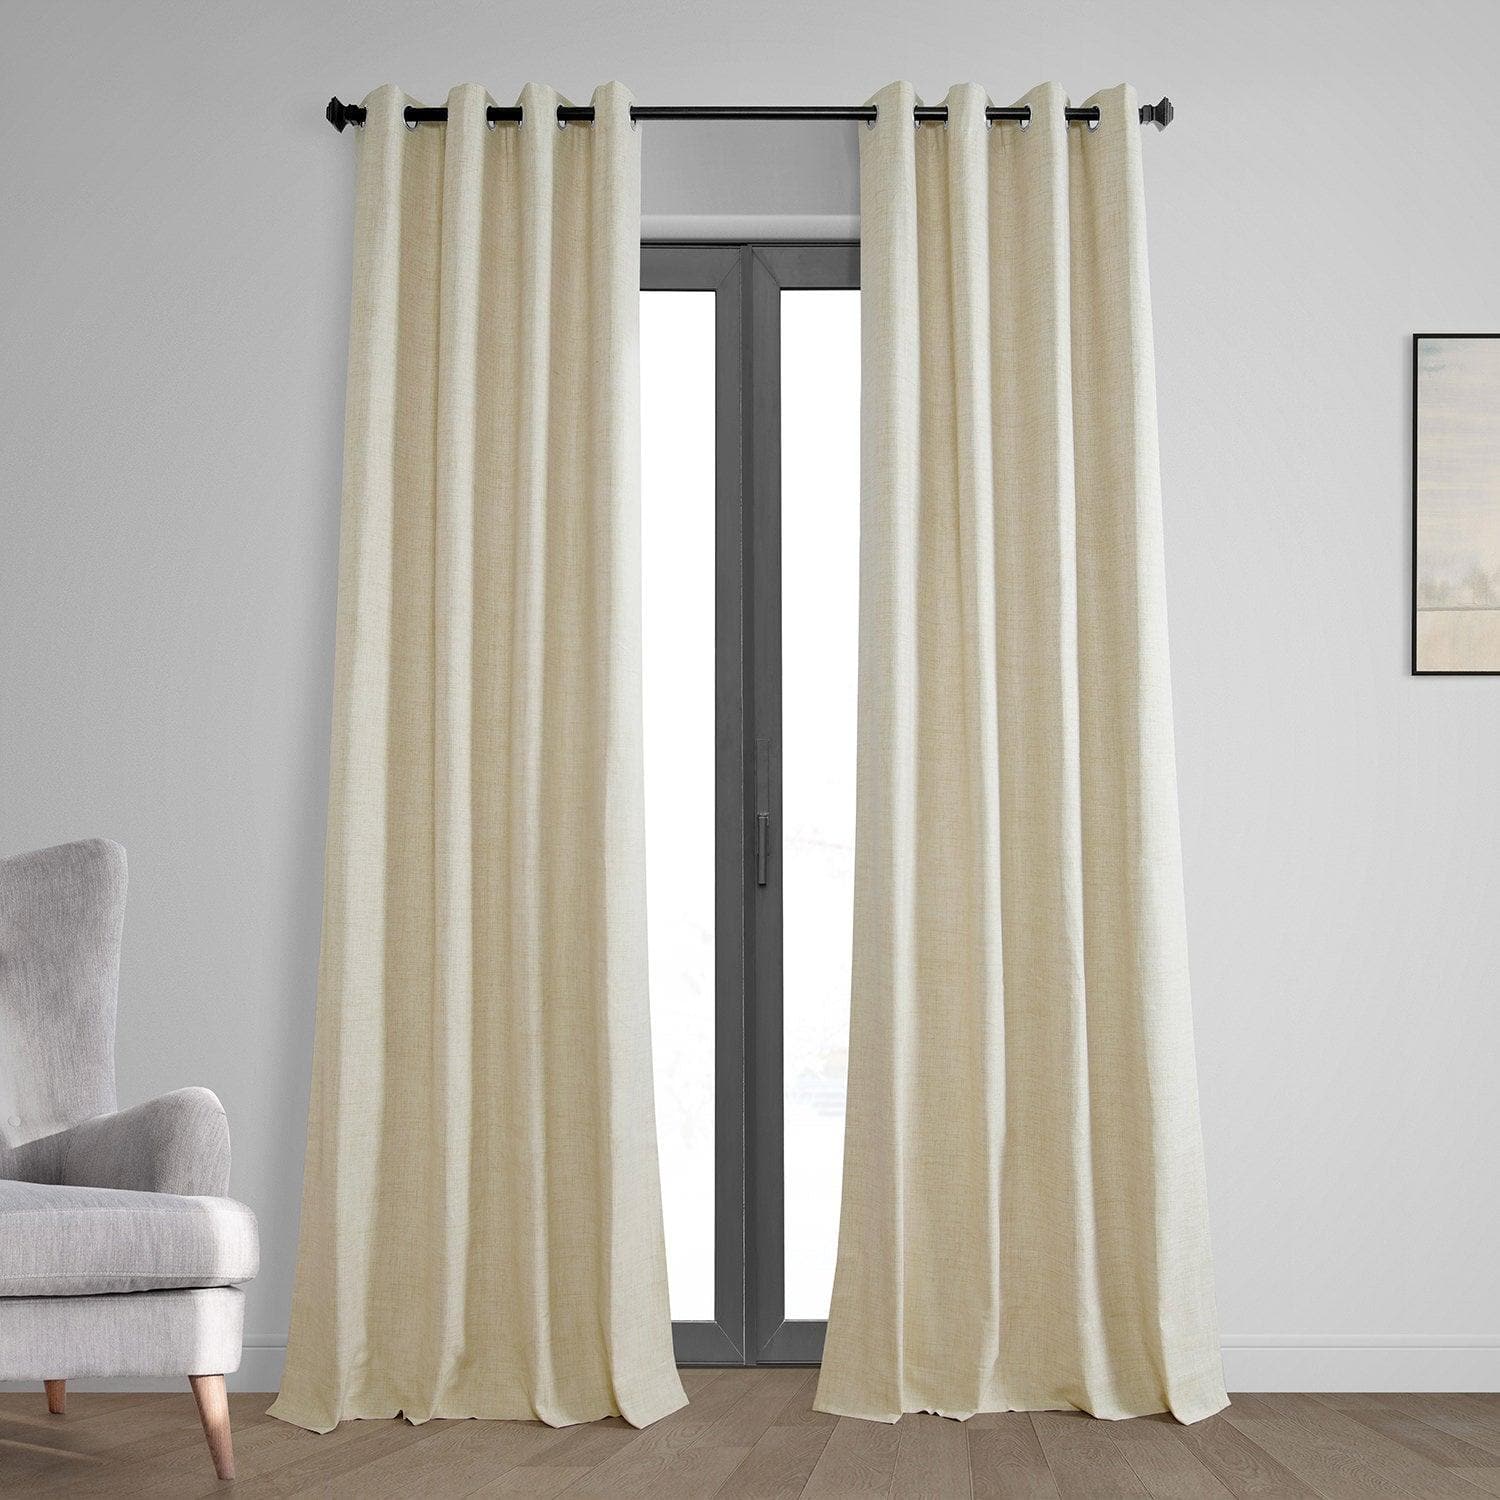 Natural Light Beige Grommet Thermal Cross Linen Weave Blackout Curtain